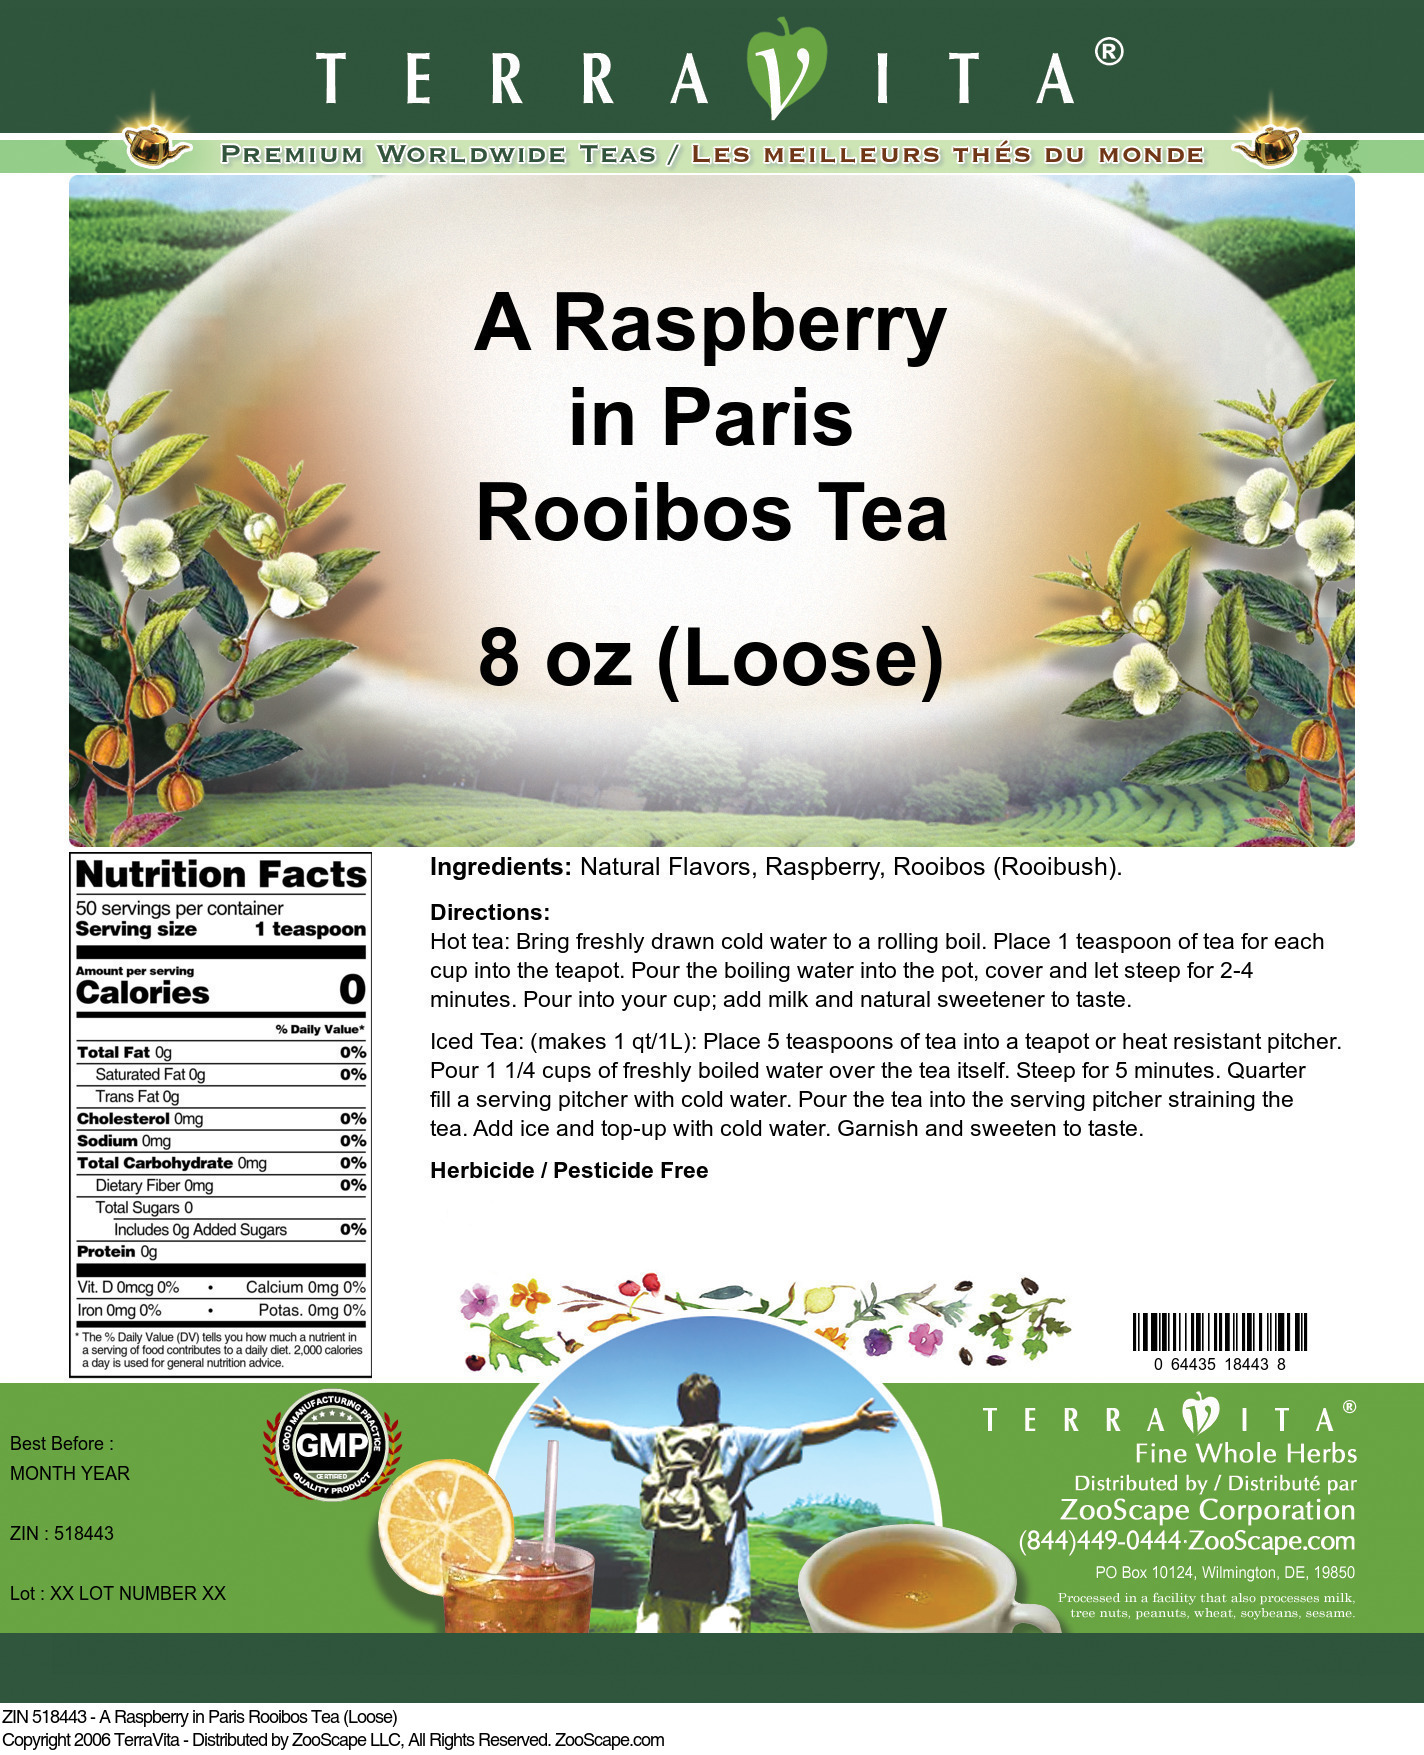 A Raspberry in Paris Rooibos Tea (Loose) - Label